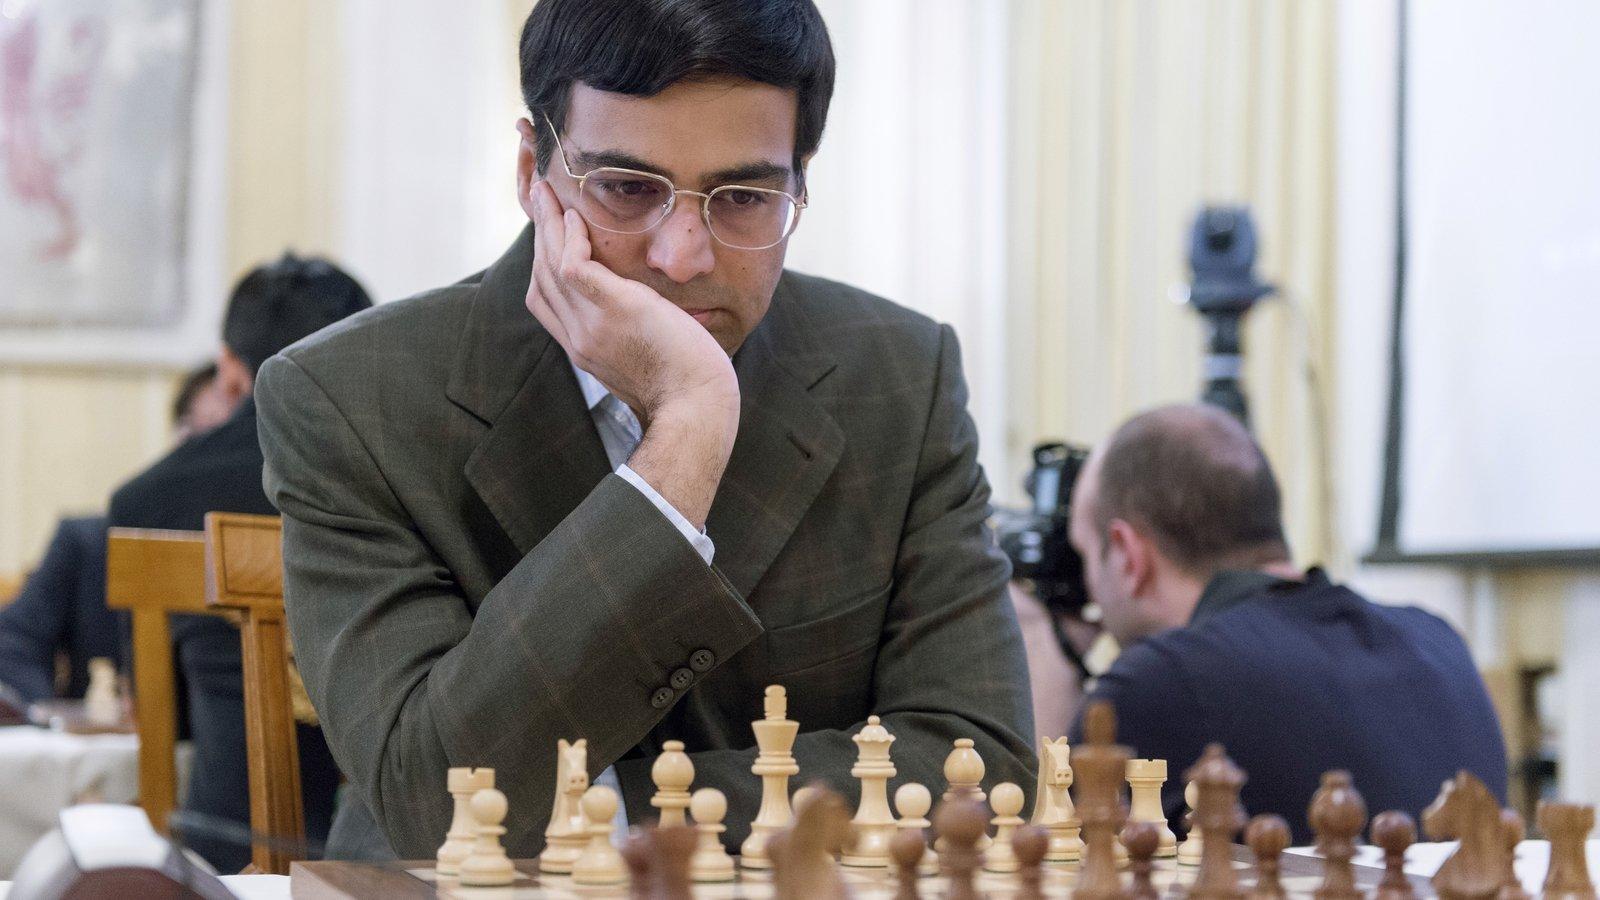 Billionaire admits cheating to beat Indian chess champ